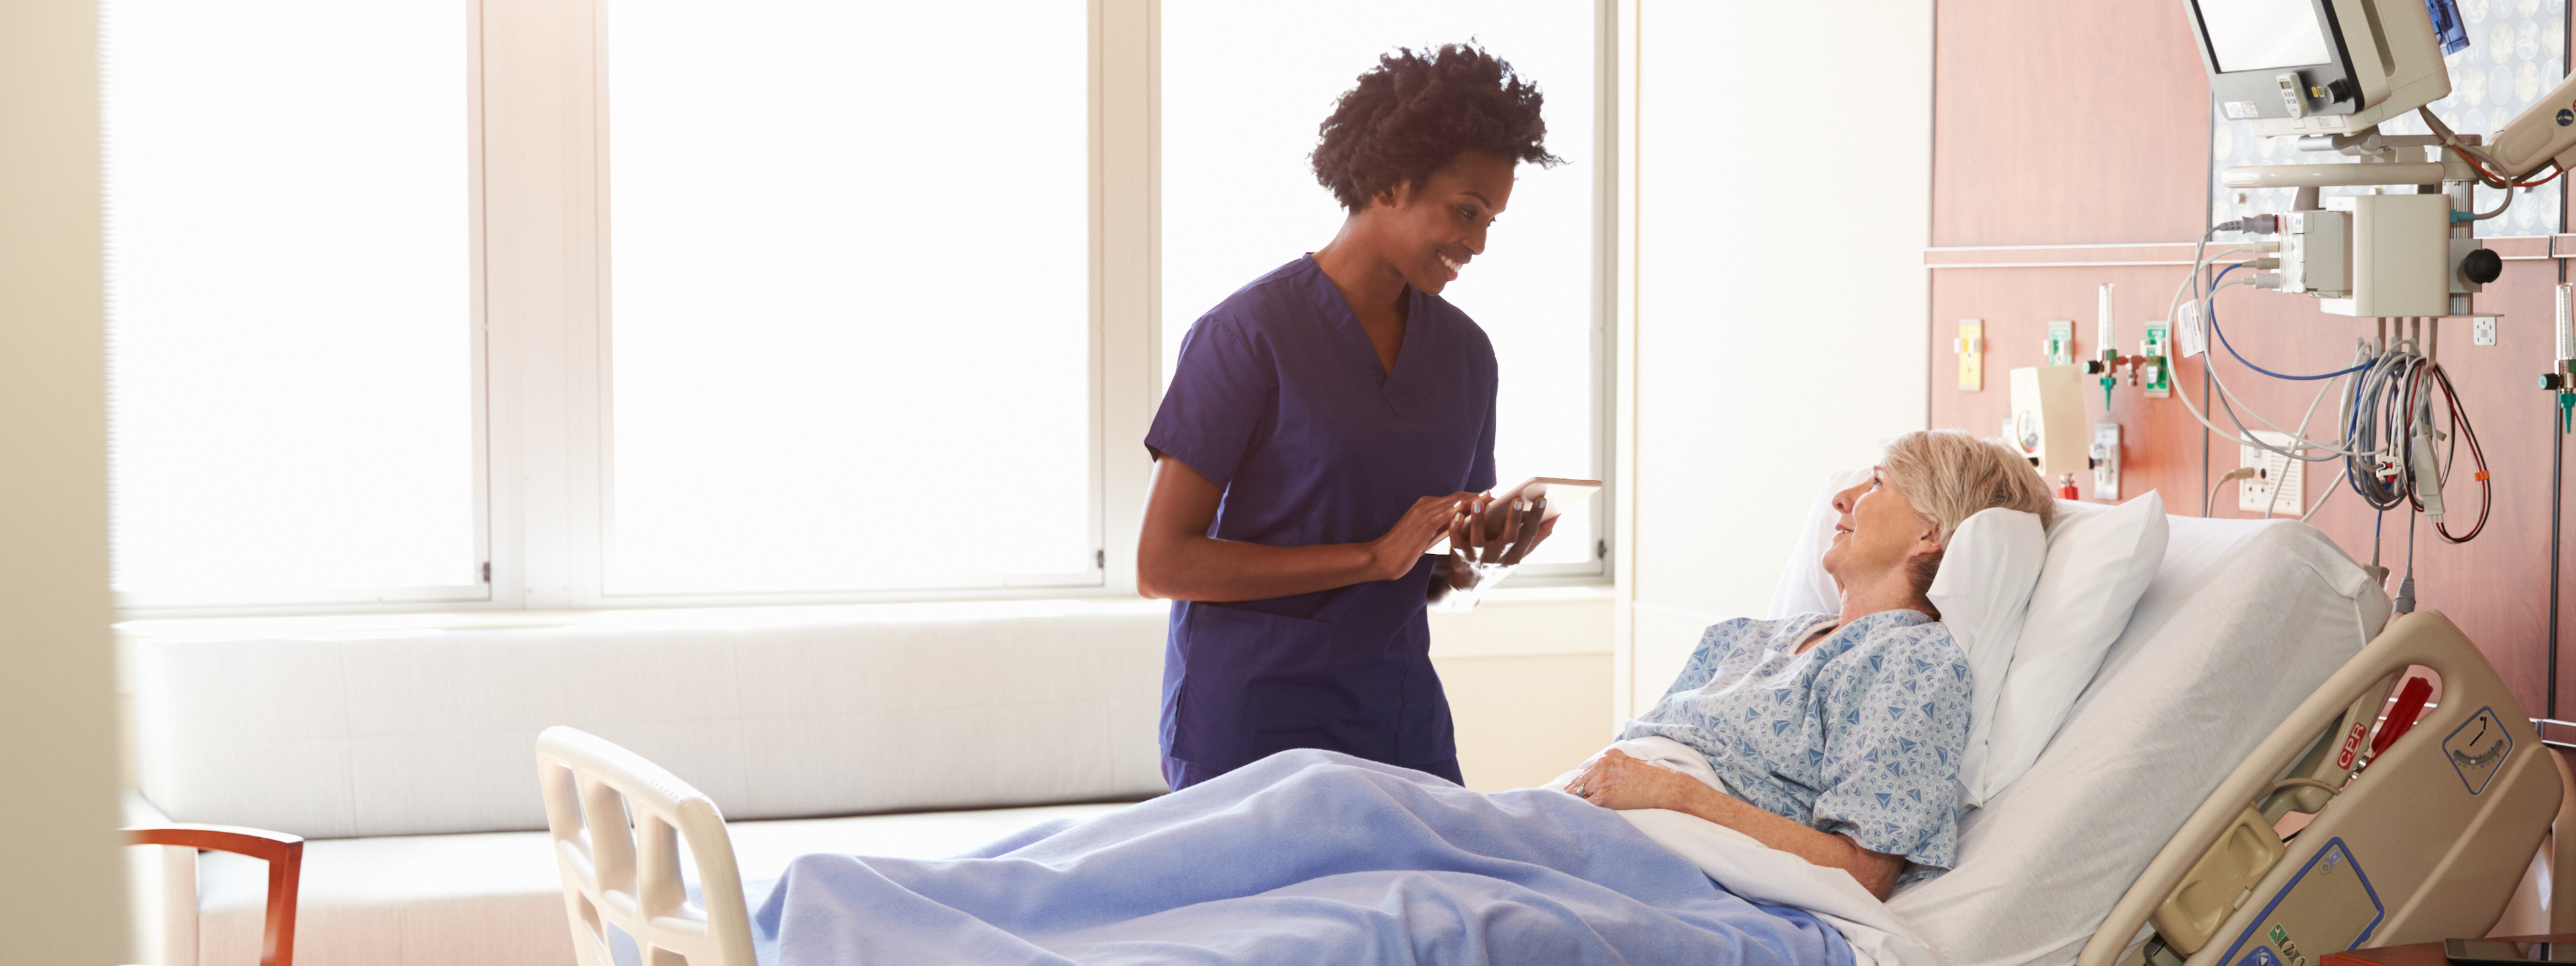 Hospital Nurse With Digital Tablet Talks To Senior Patient